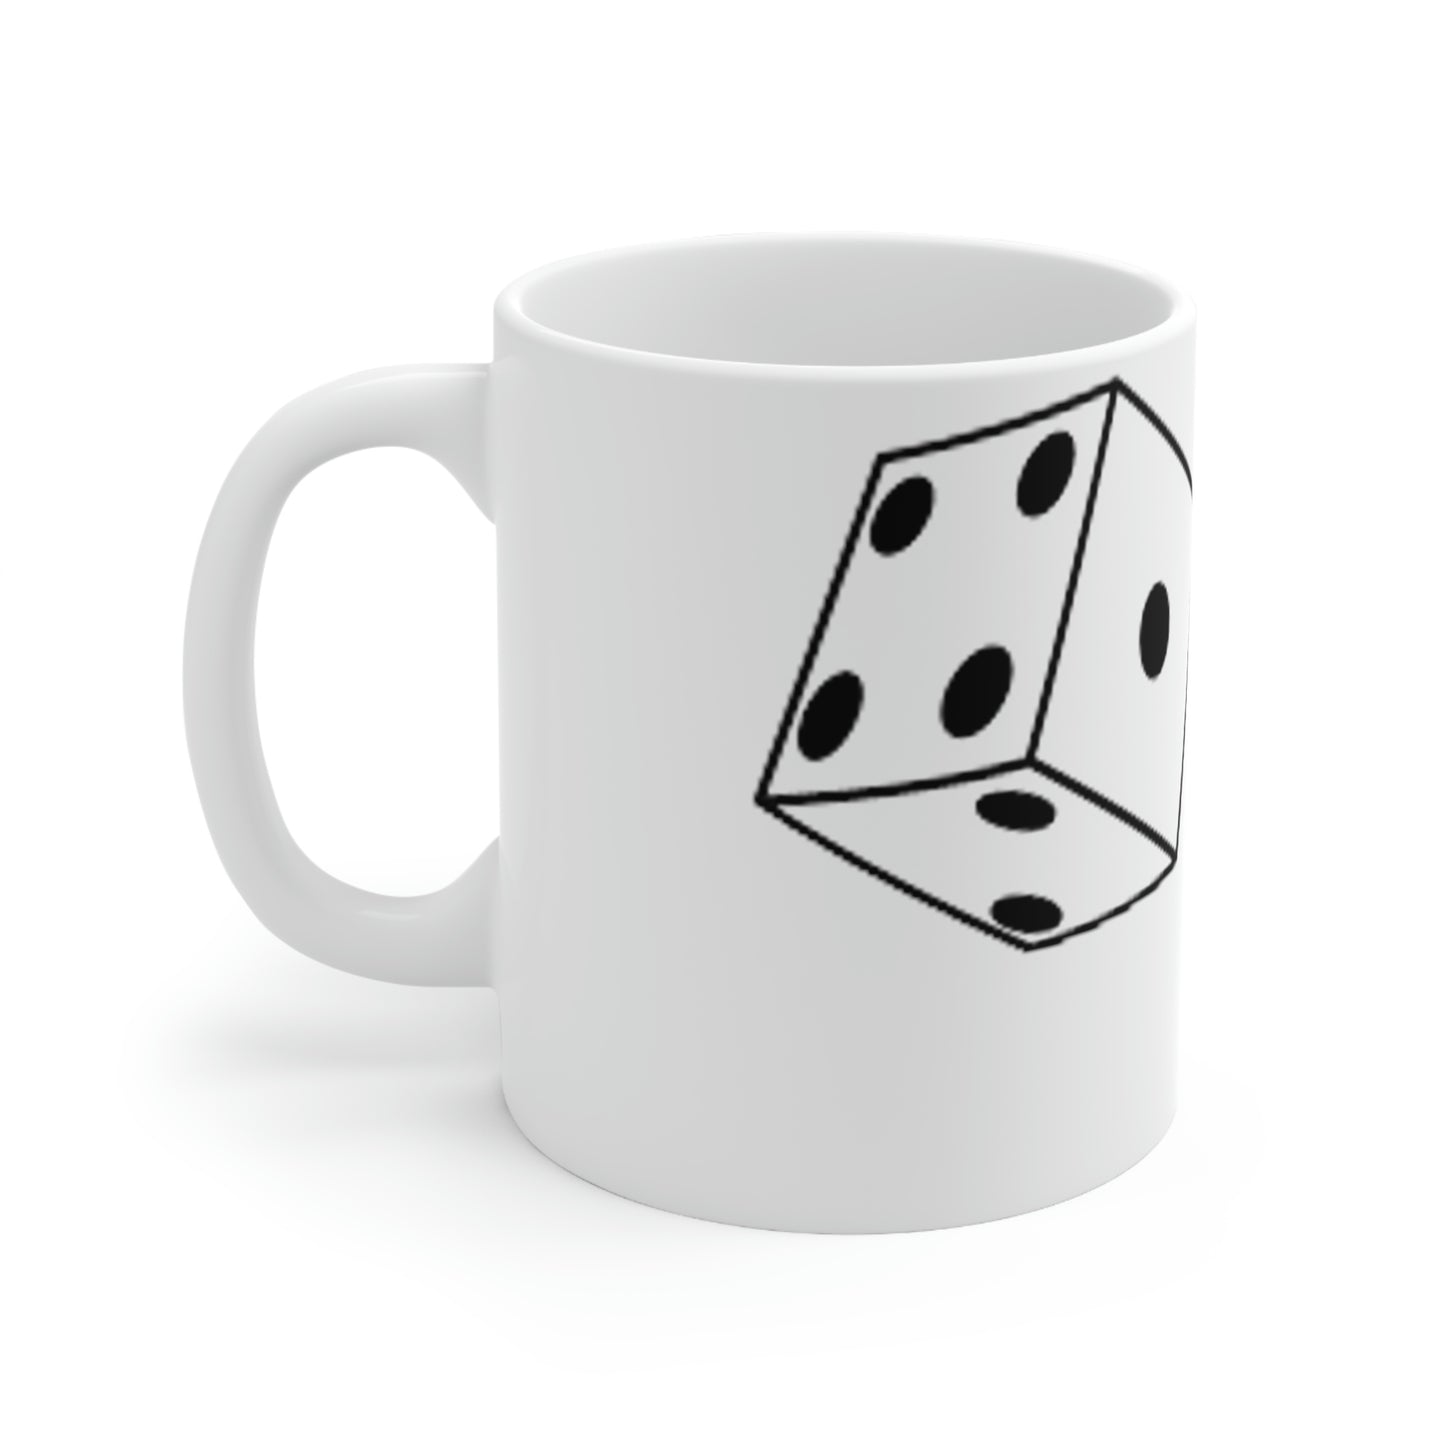 Dice Roll Ceramic Mug 11oz